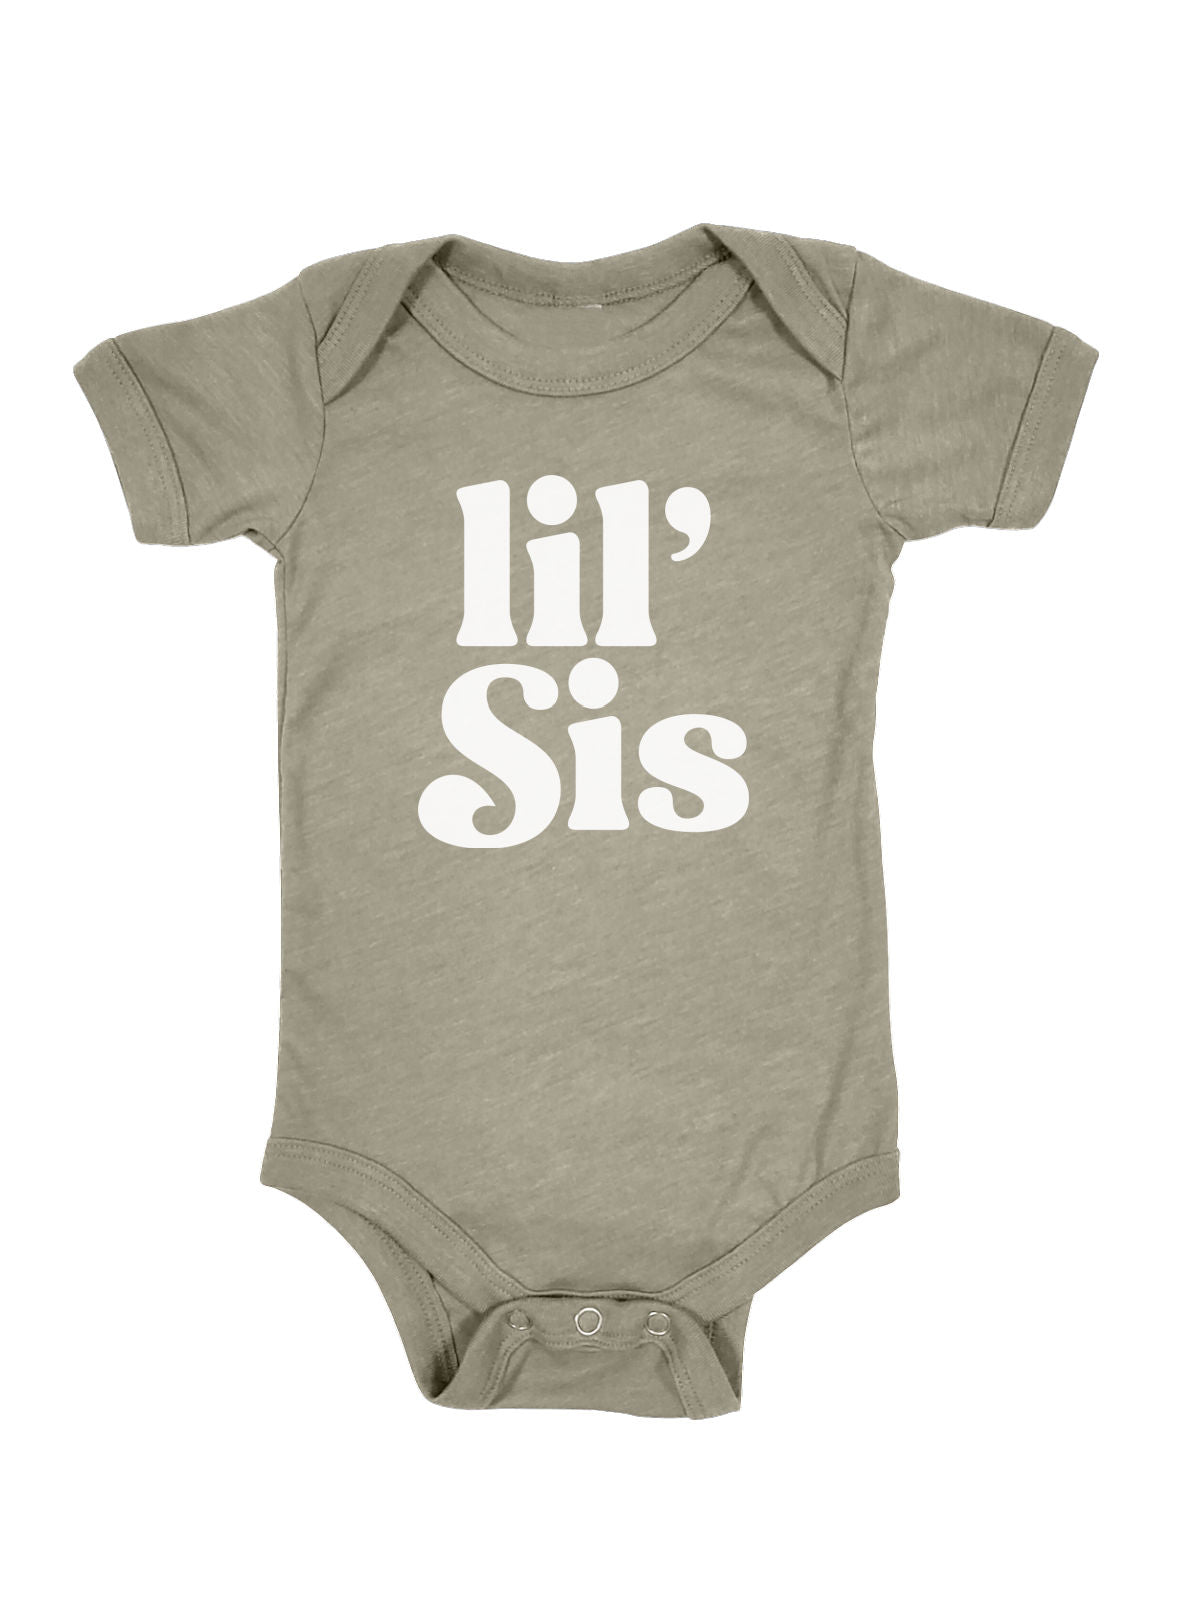 Lil Sis Infant Bodysuit in Stone